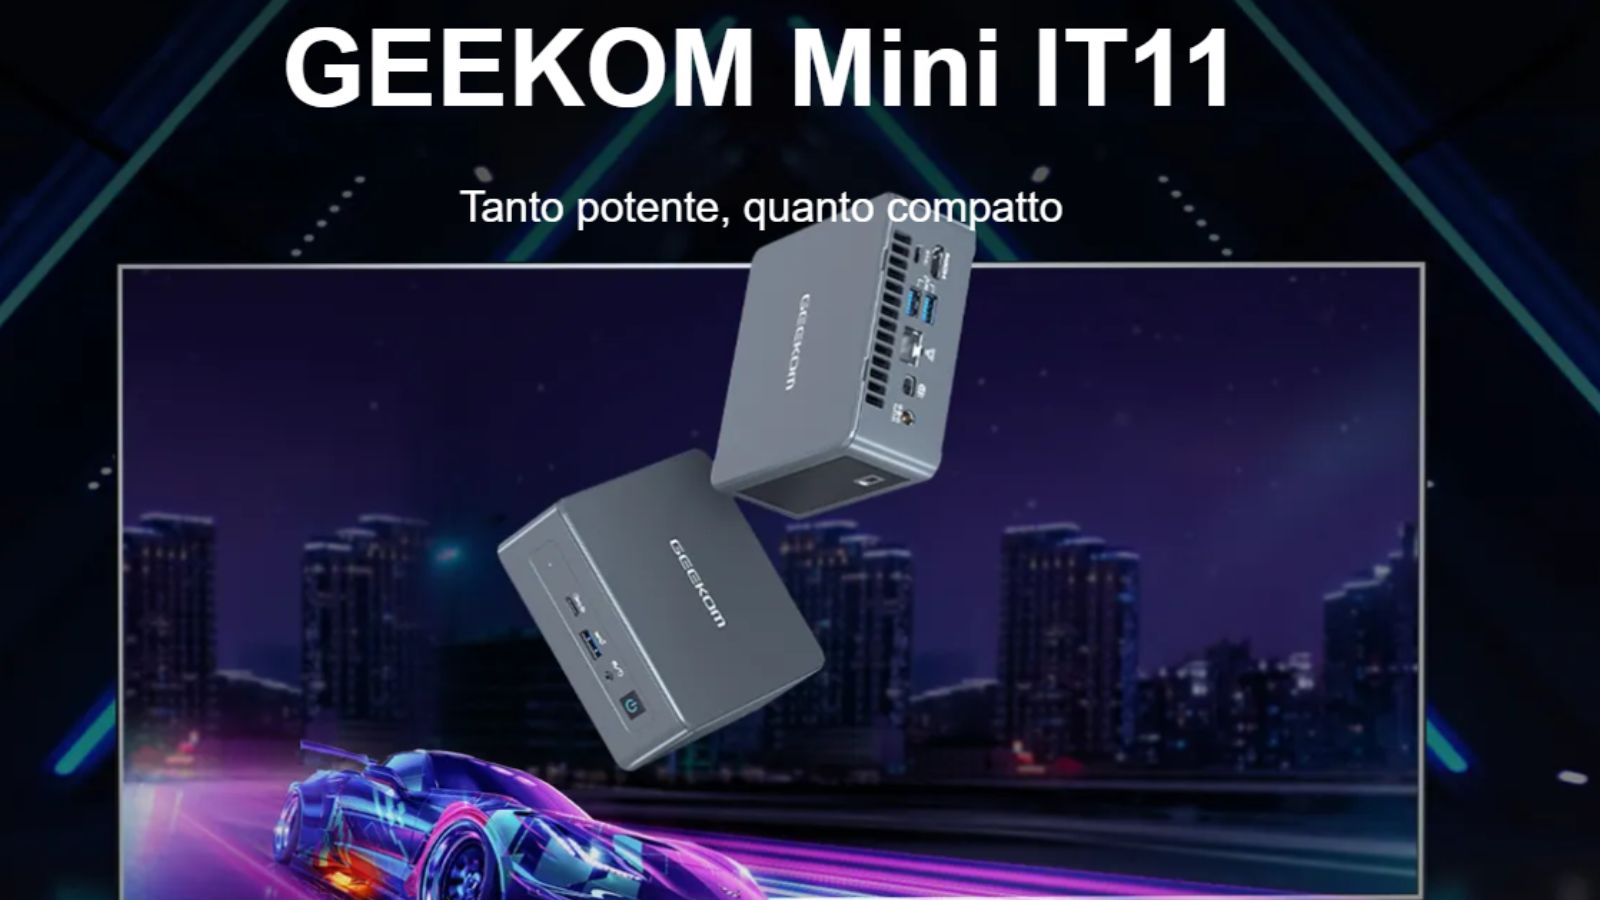 Geekom Mini IT11, il mini PC con Windows oggi in super OFFERTA